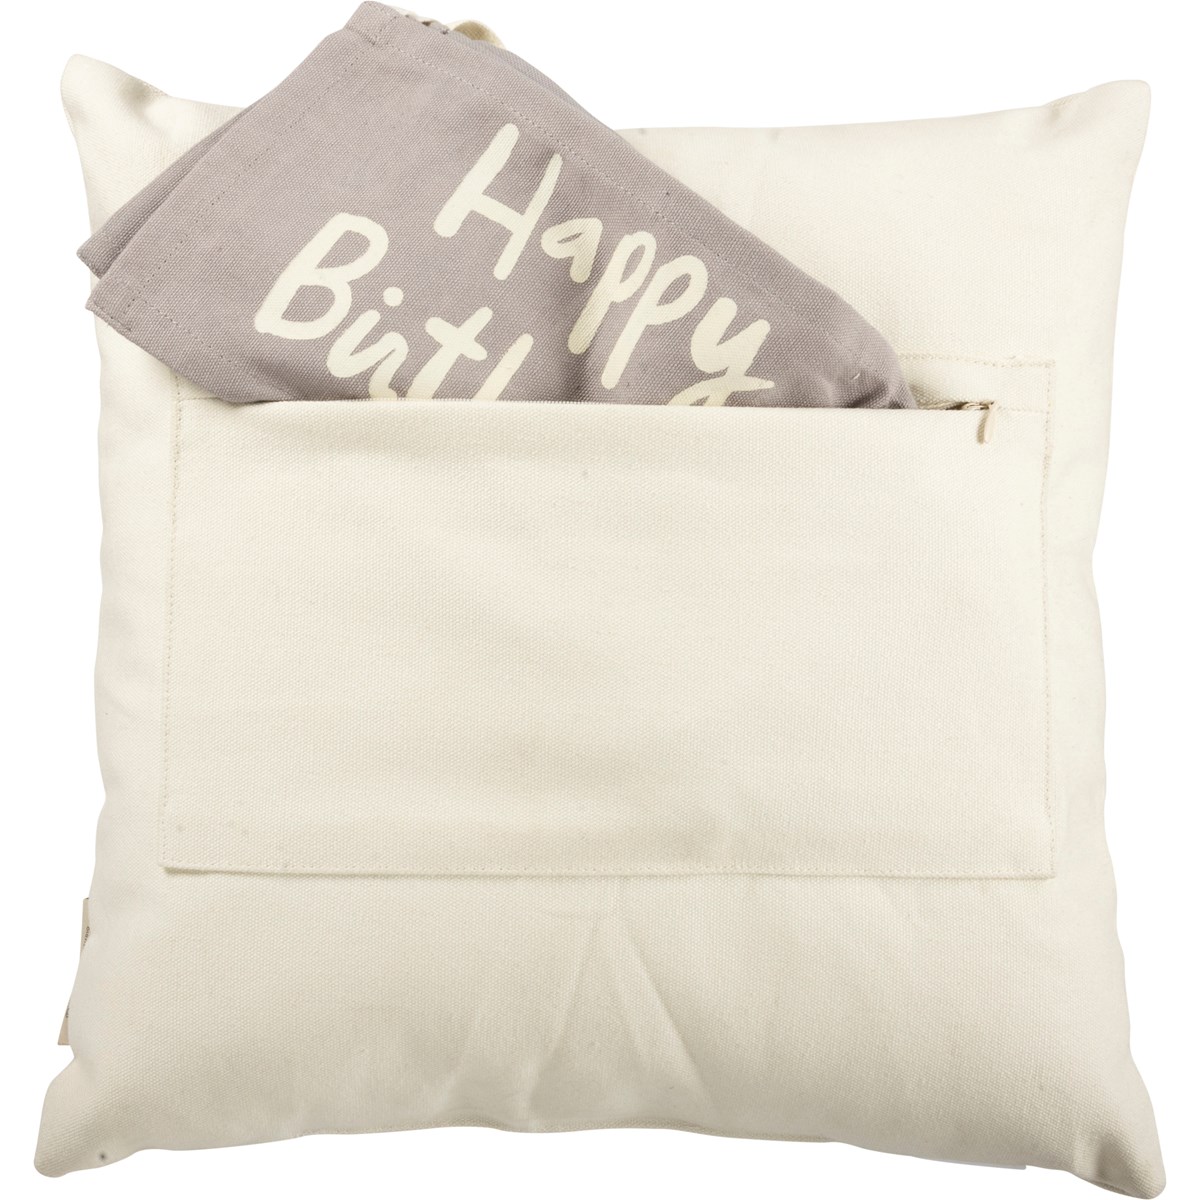 Milestone Pillow - Oh So Big - 15" x 15" - Cotton, Polyester, Ribbon, Zipper